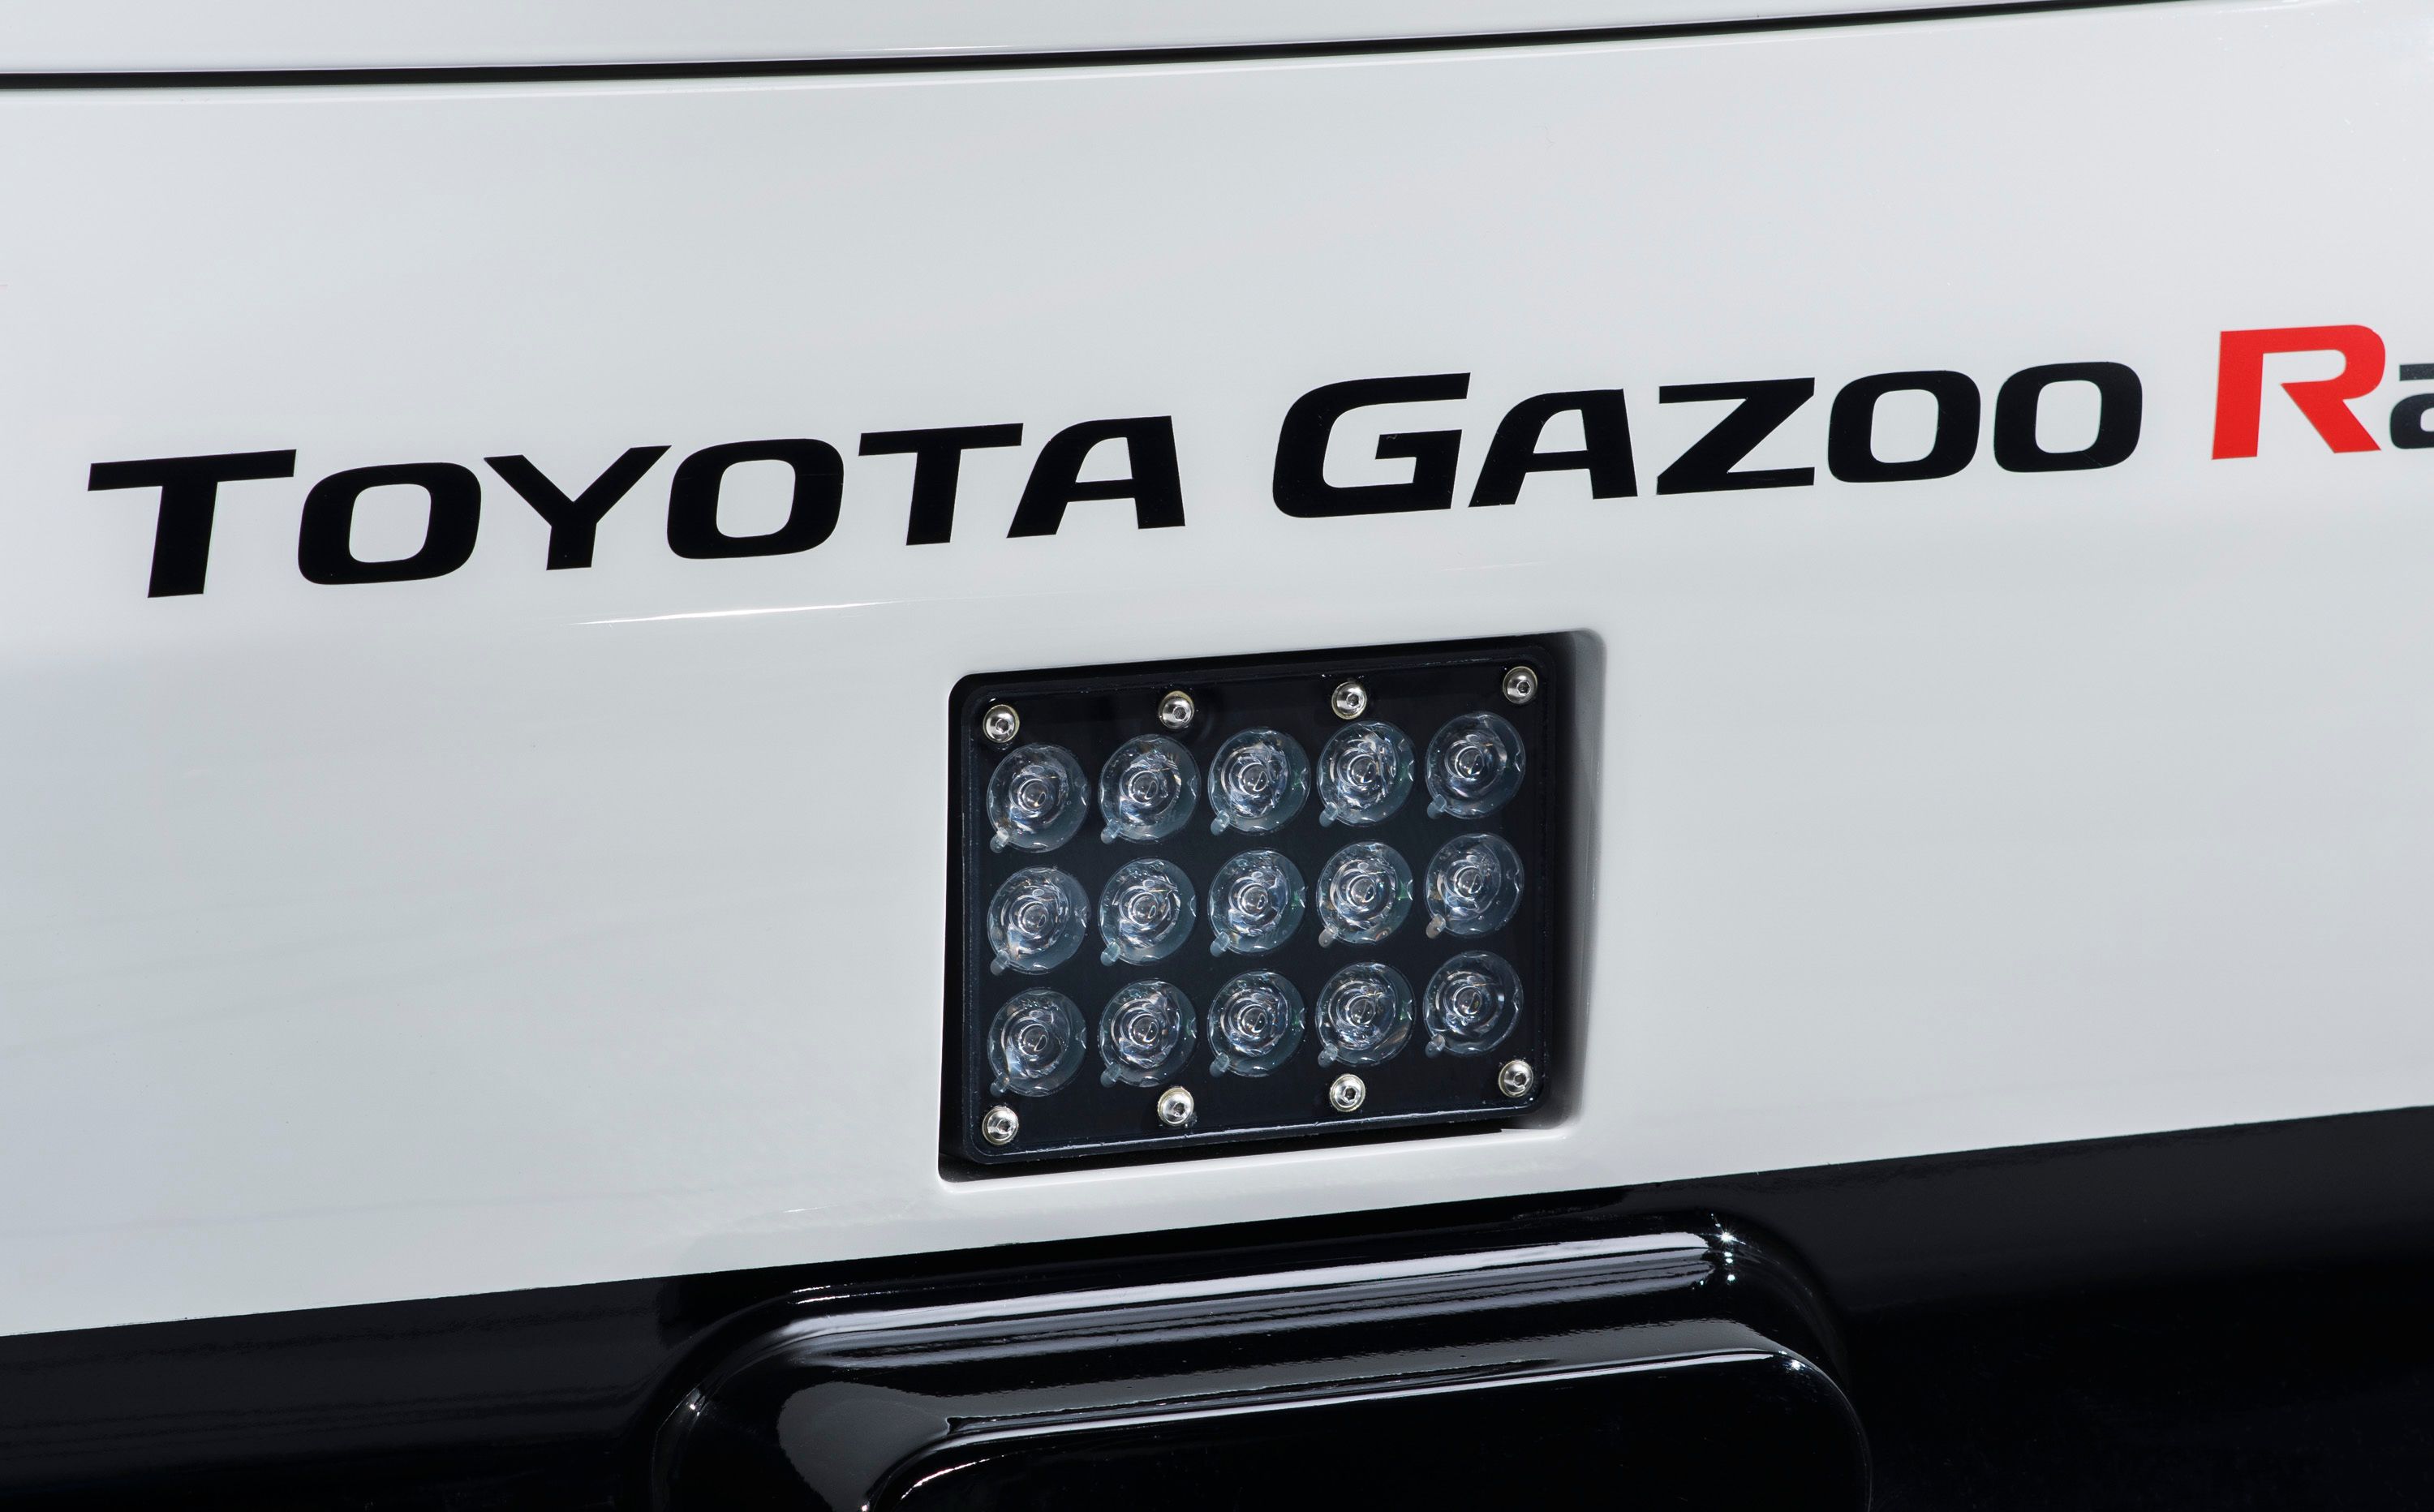 2018 Toyota GR Supra Racing Concept